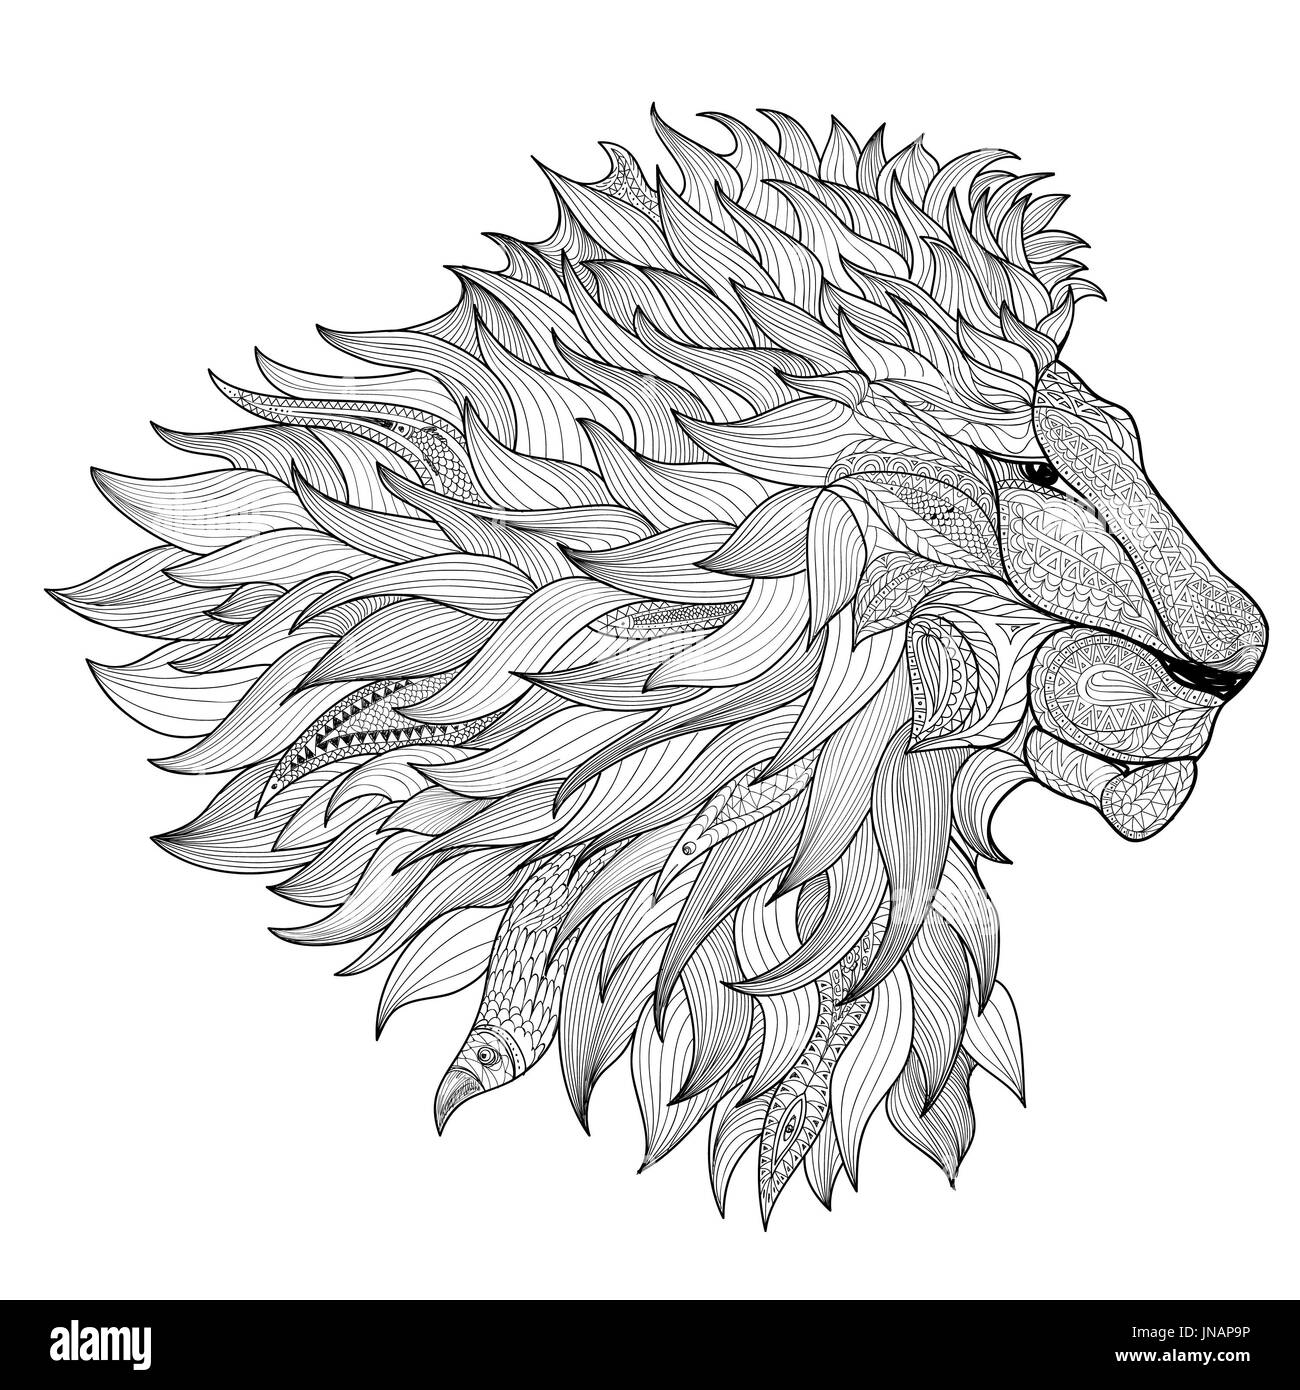 Lion isolated. Animal zentangle hand drawn illustration Stock Photo